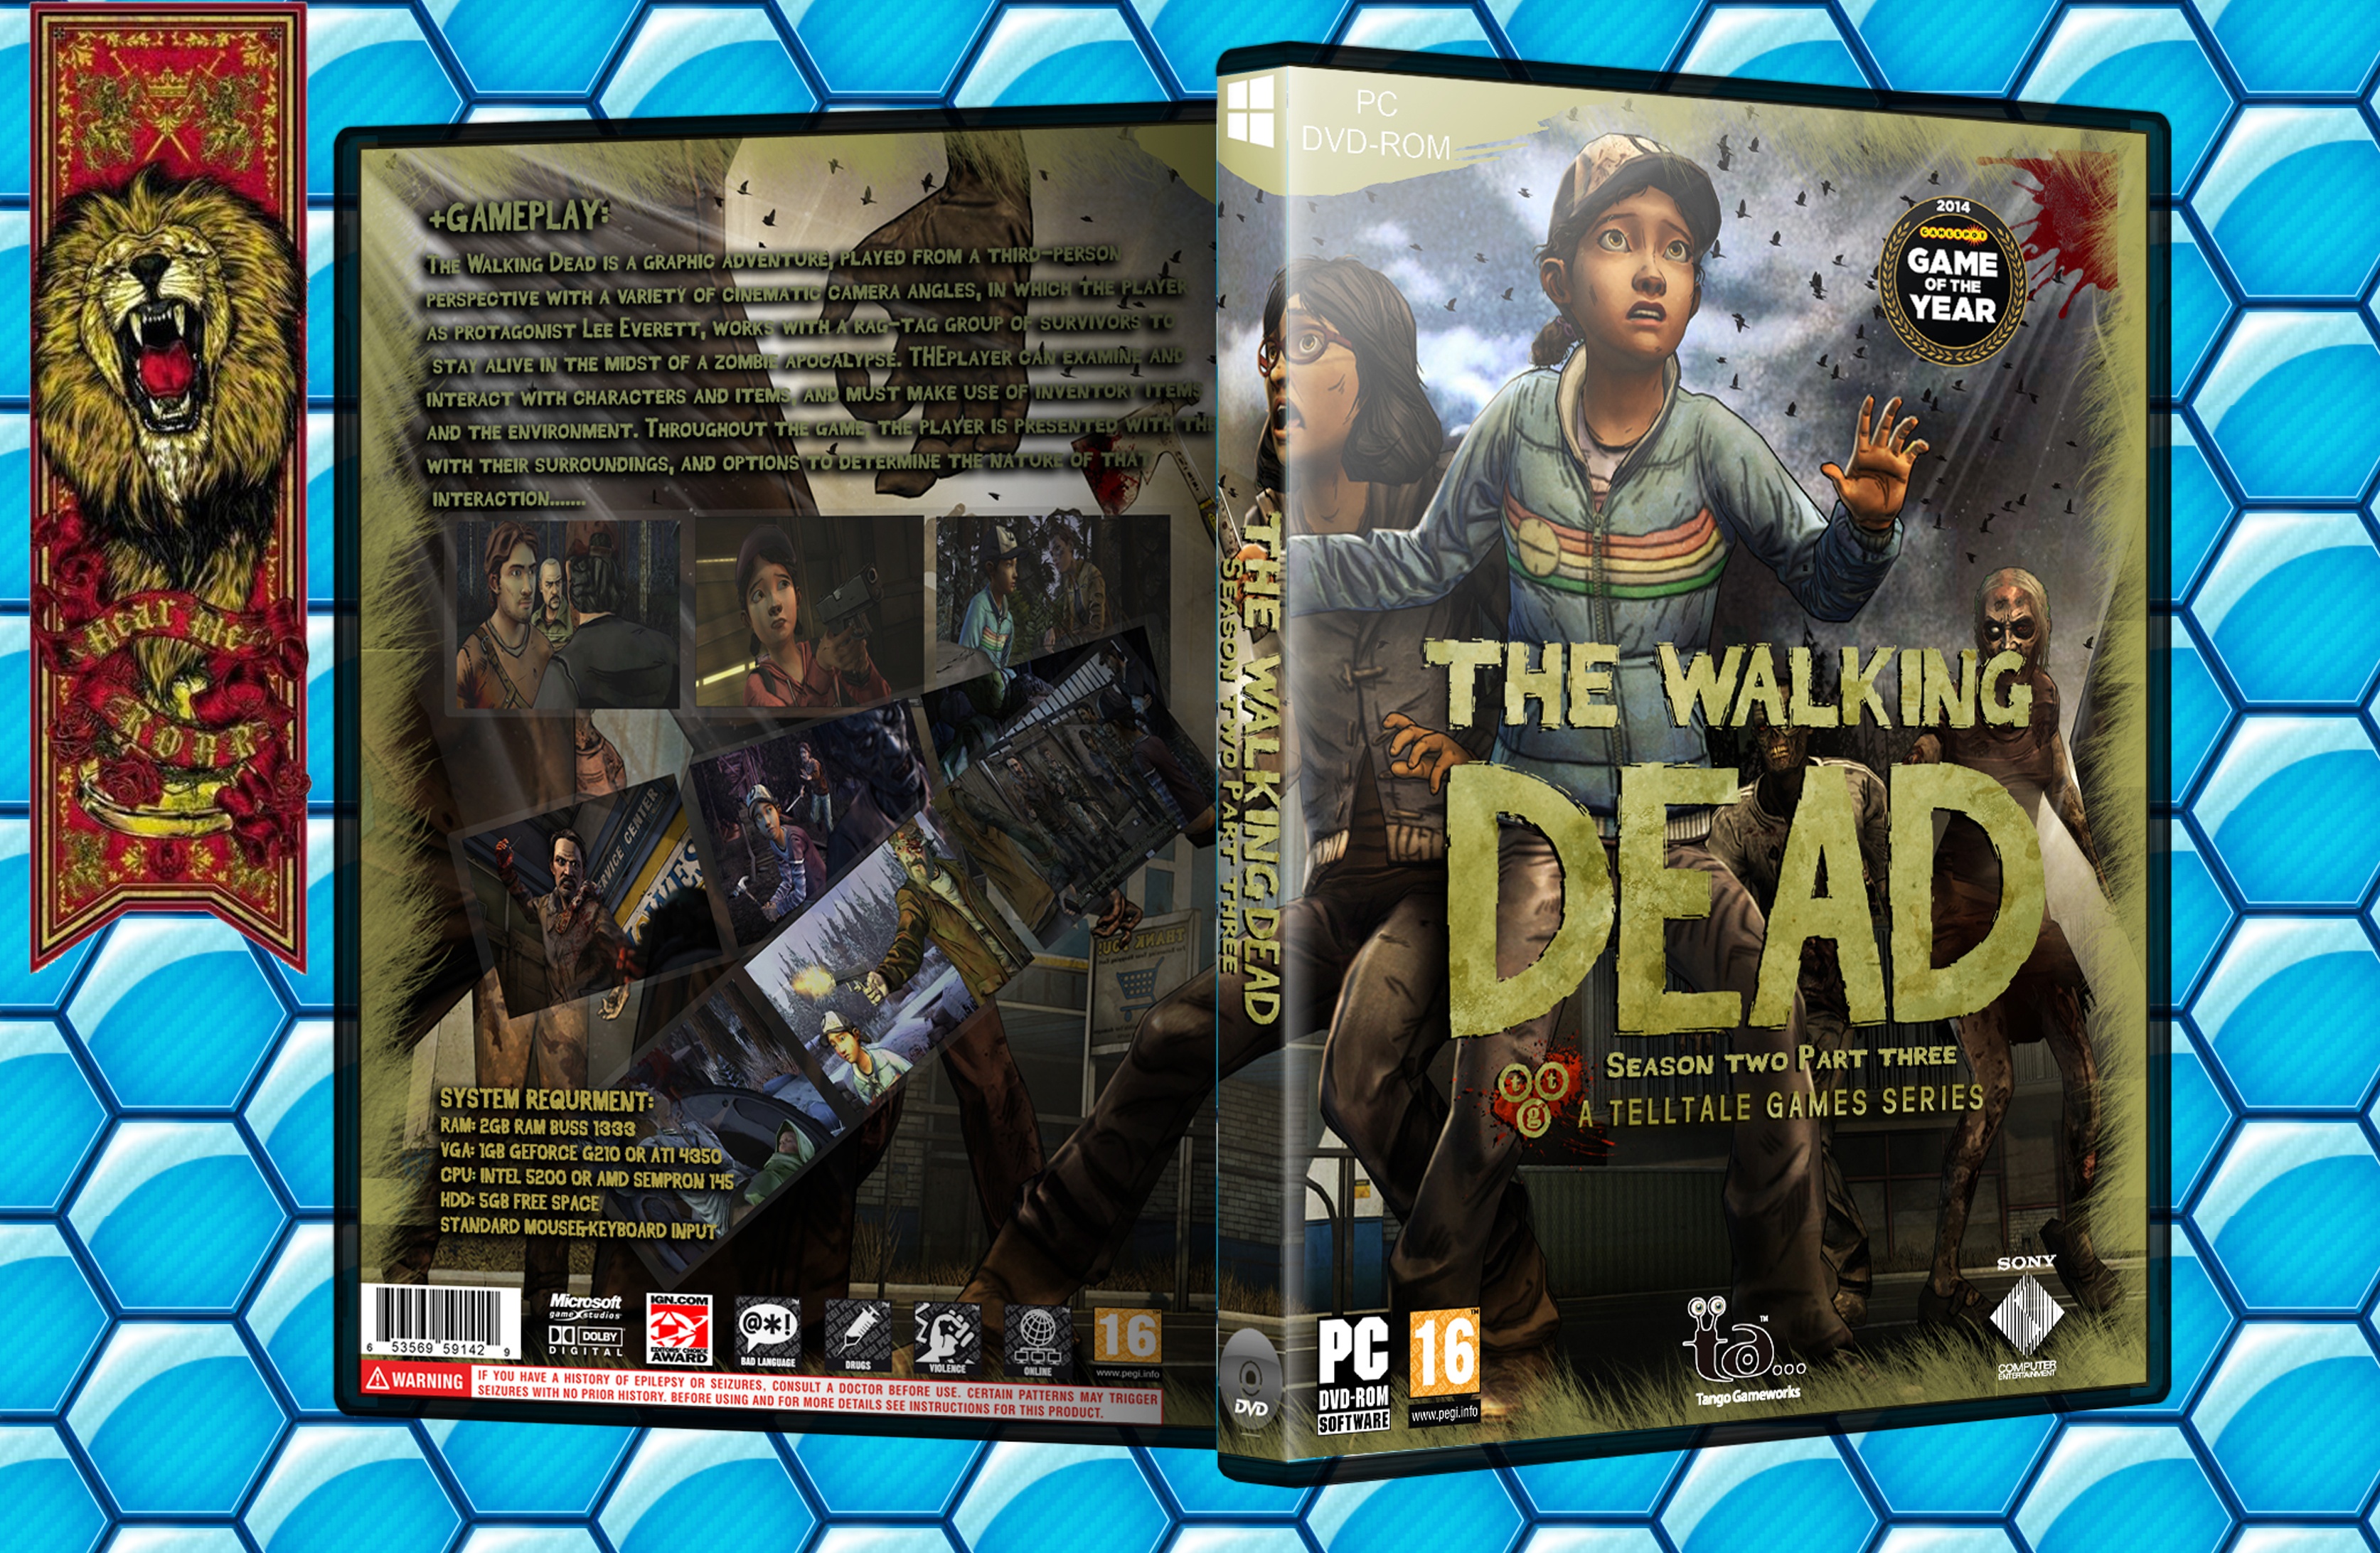 The Walking Dead Season 2 box cover